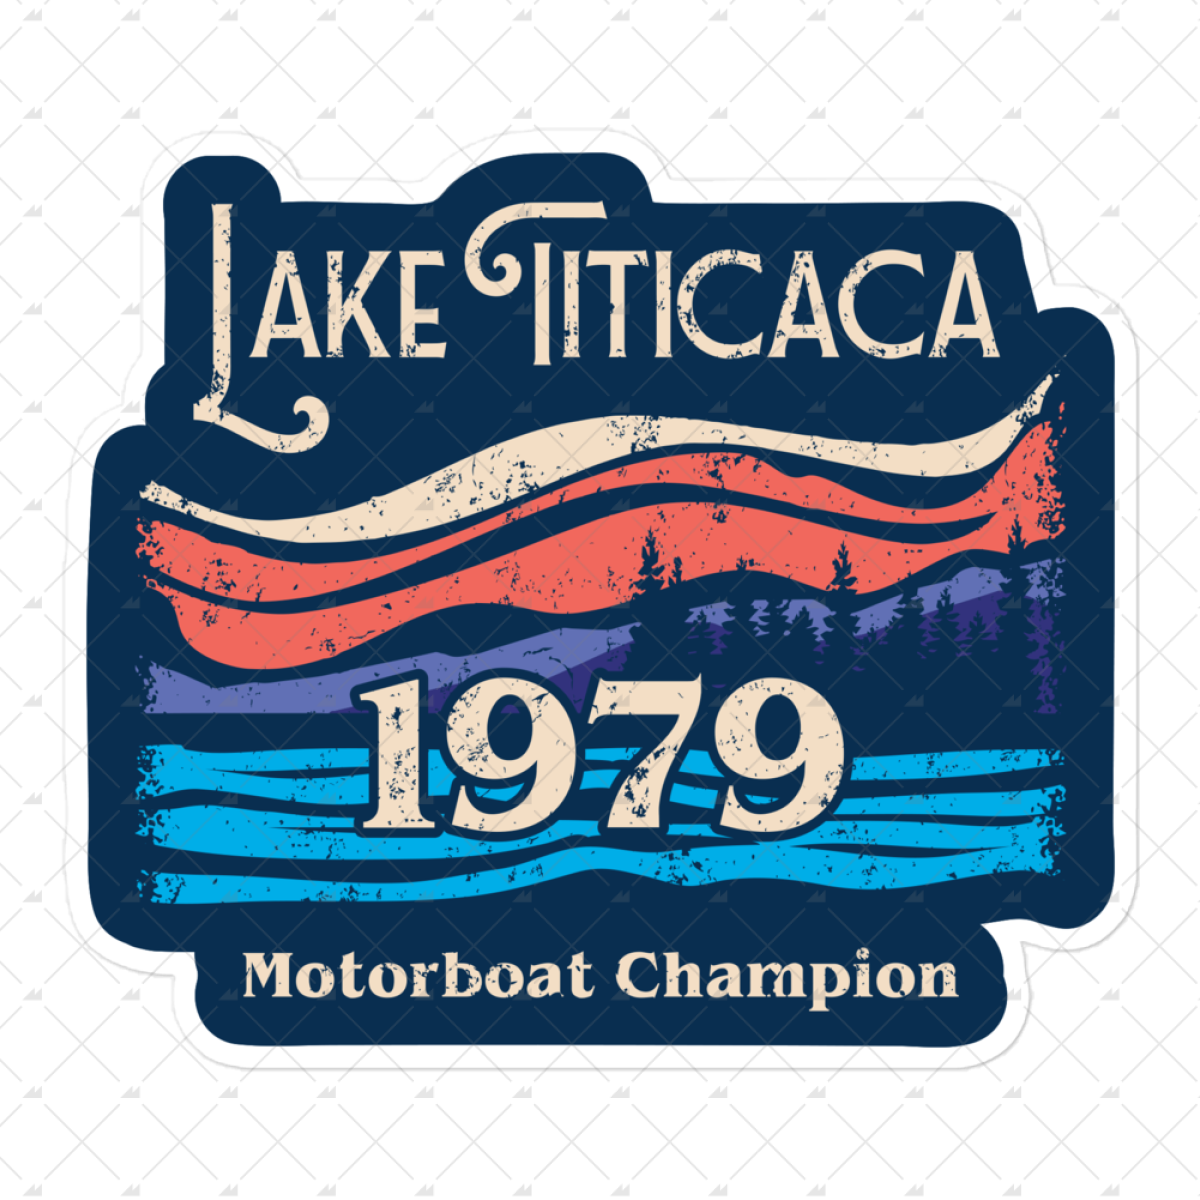 Lake Titicaca Motorboat Champion - Sticker